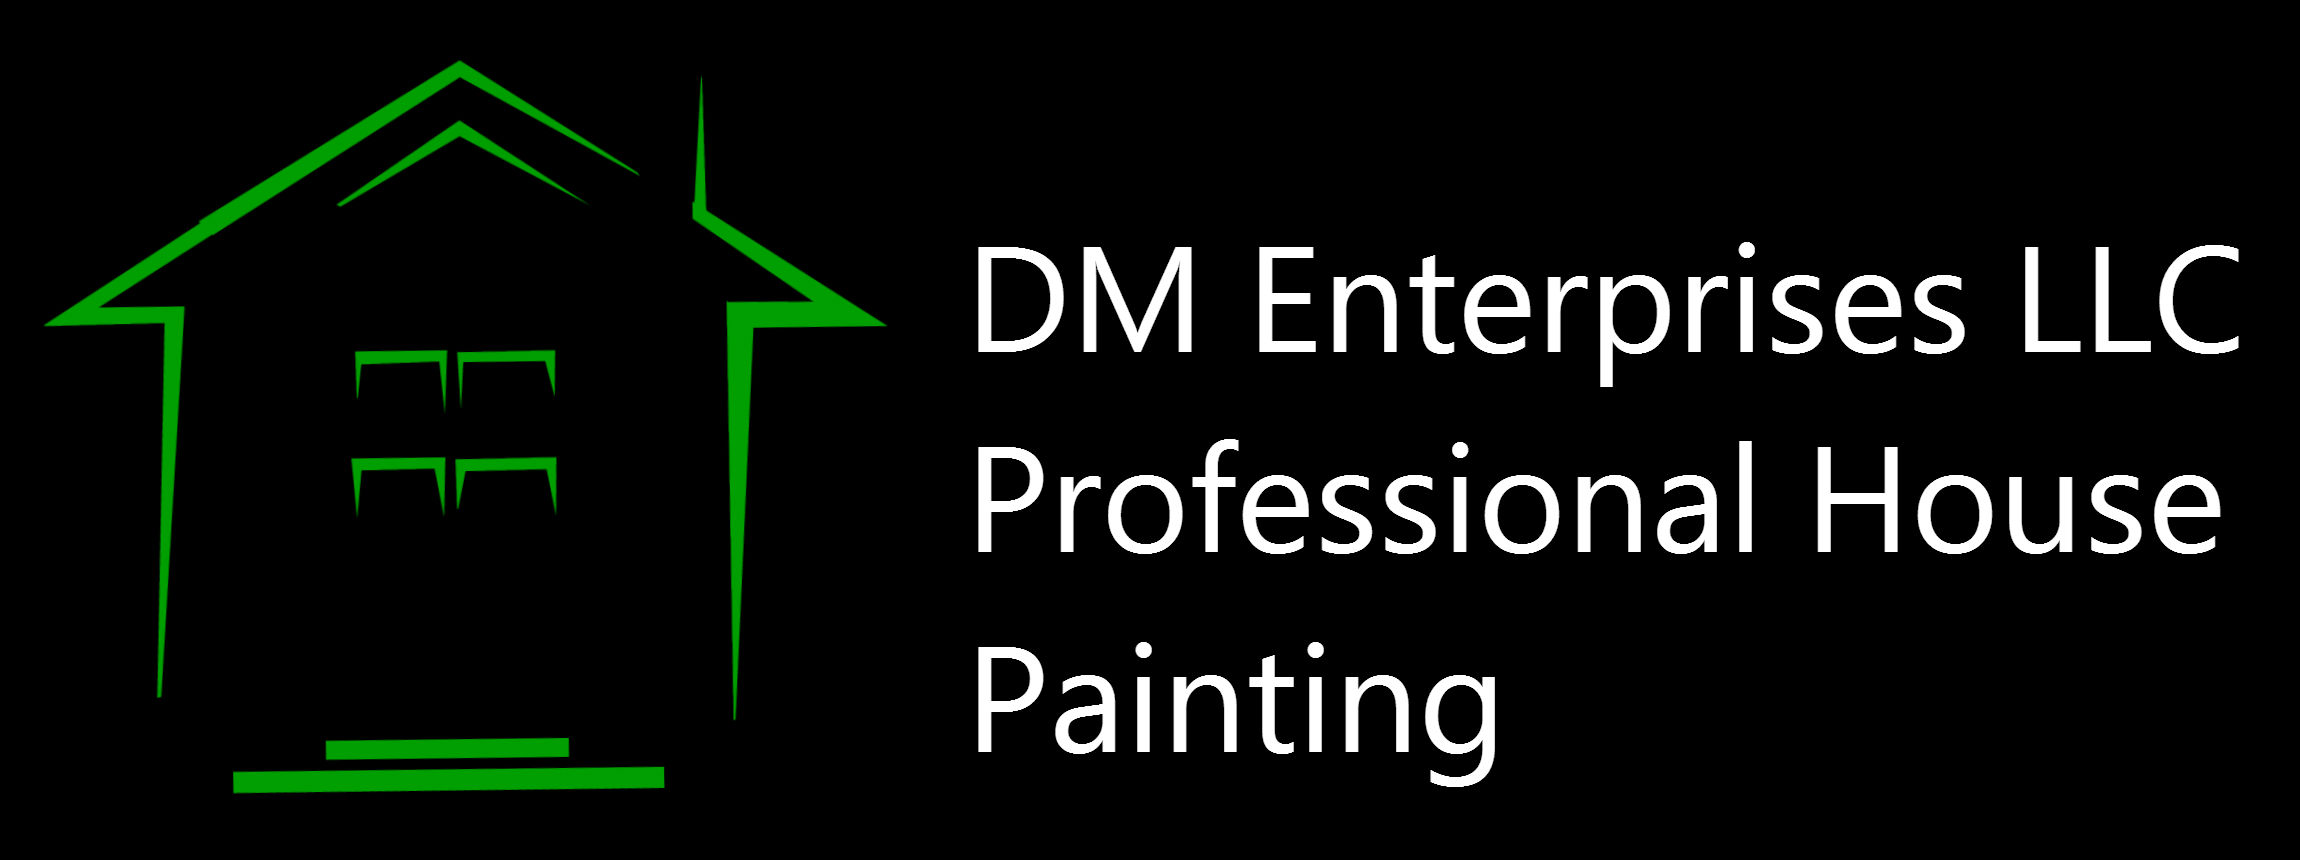 DM Enterprises LLC - Local Interior Painter From Colorado Springs, CO